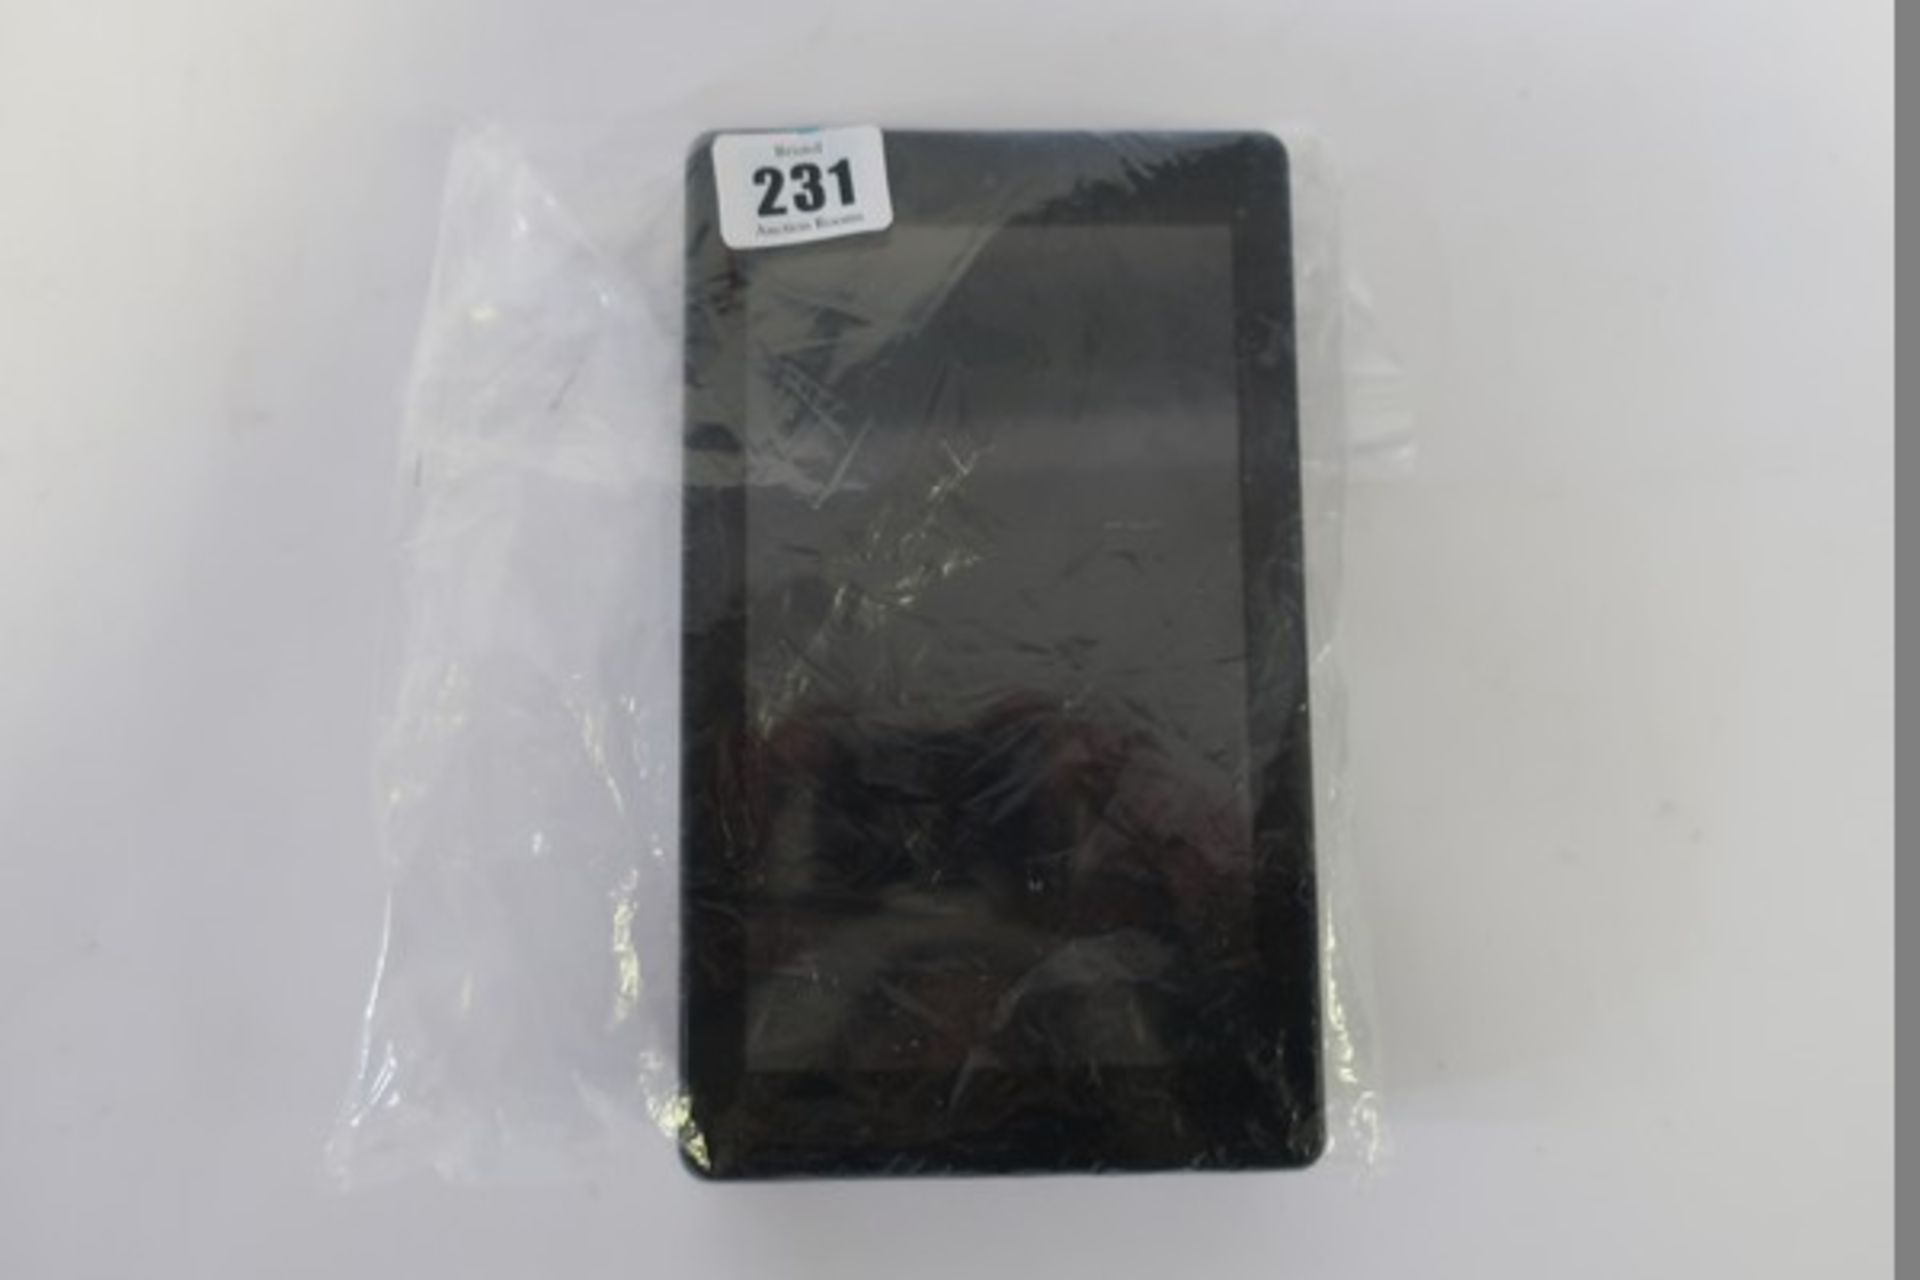 Three Amazon Kindle Fire 7 SR043KL 7" tablets in Black.